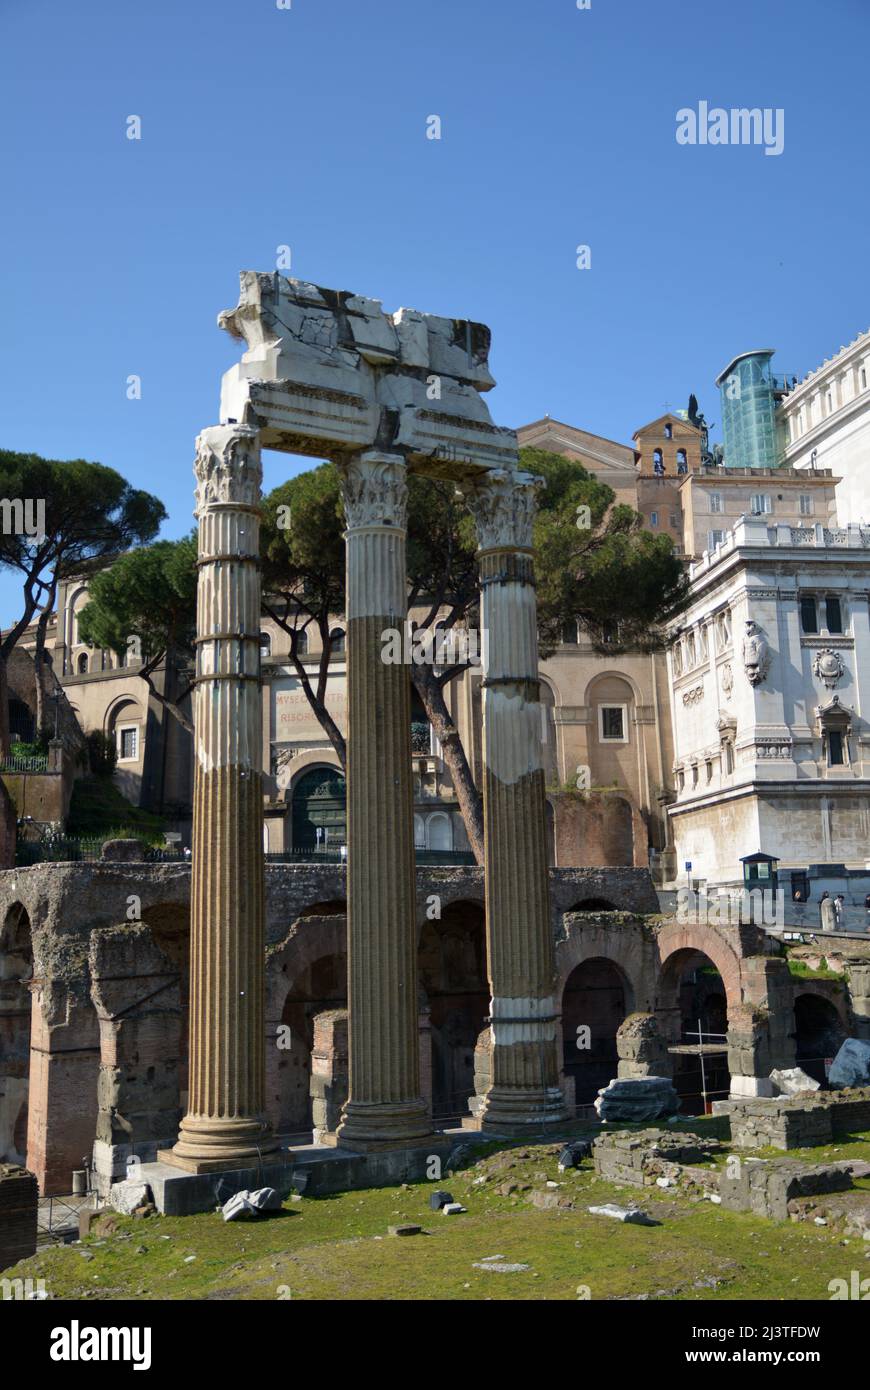 the forum of Rome Stock Photo